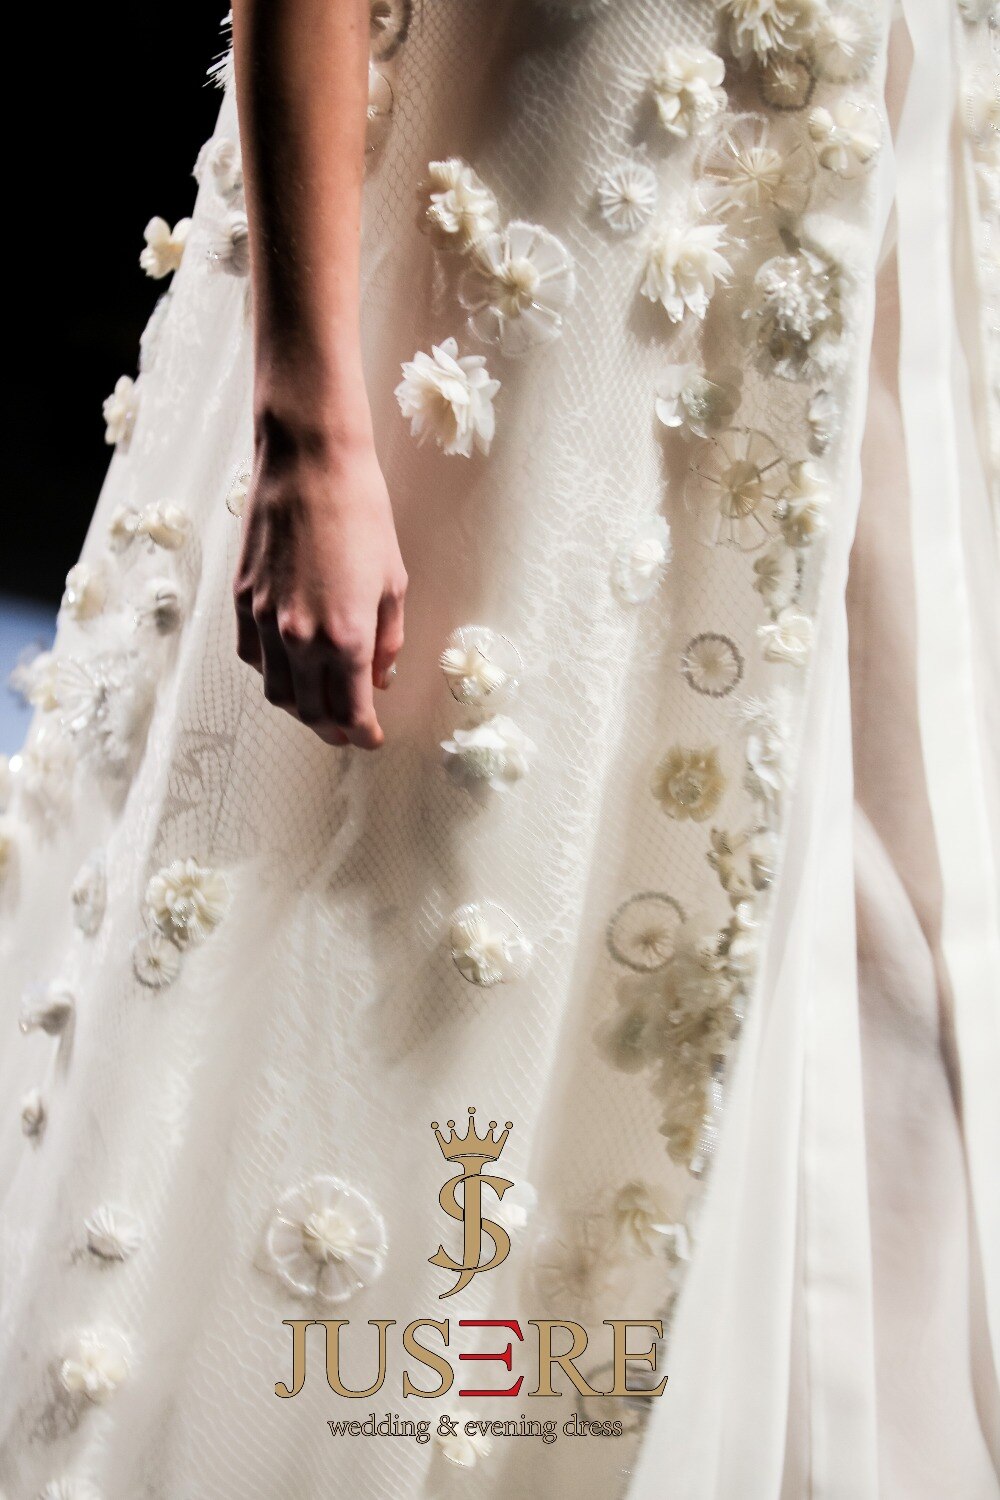 Genuine JUSERE Fashion Show Ivory Wedding Dress